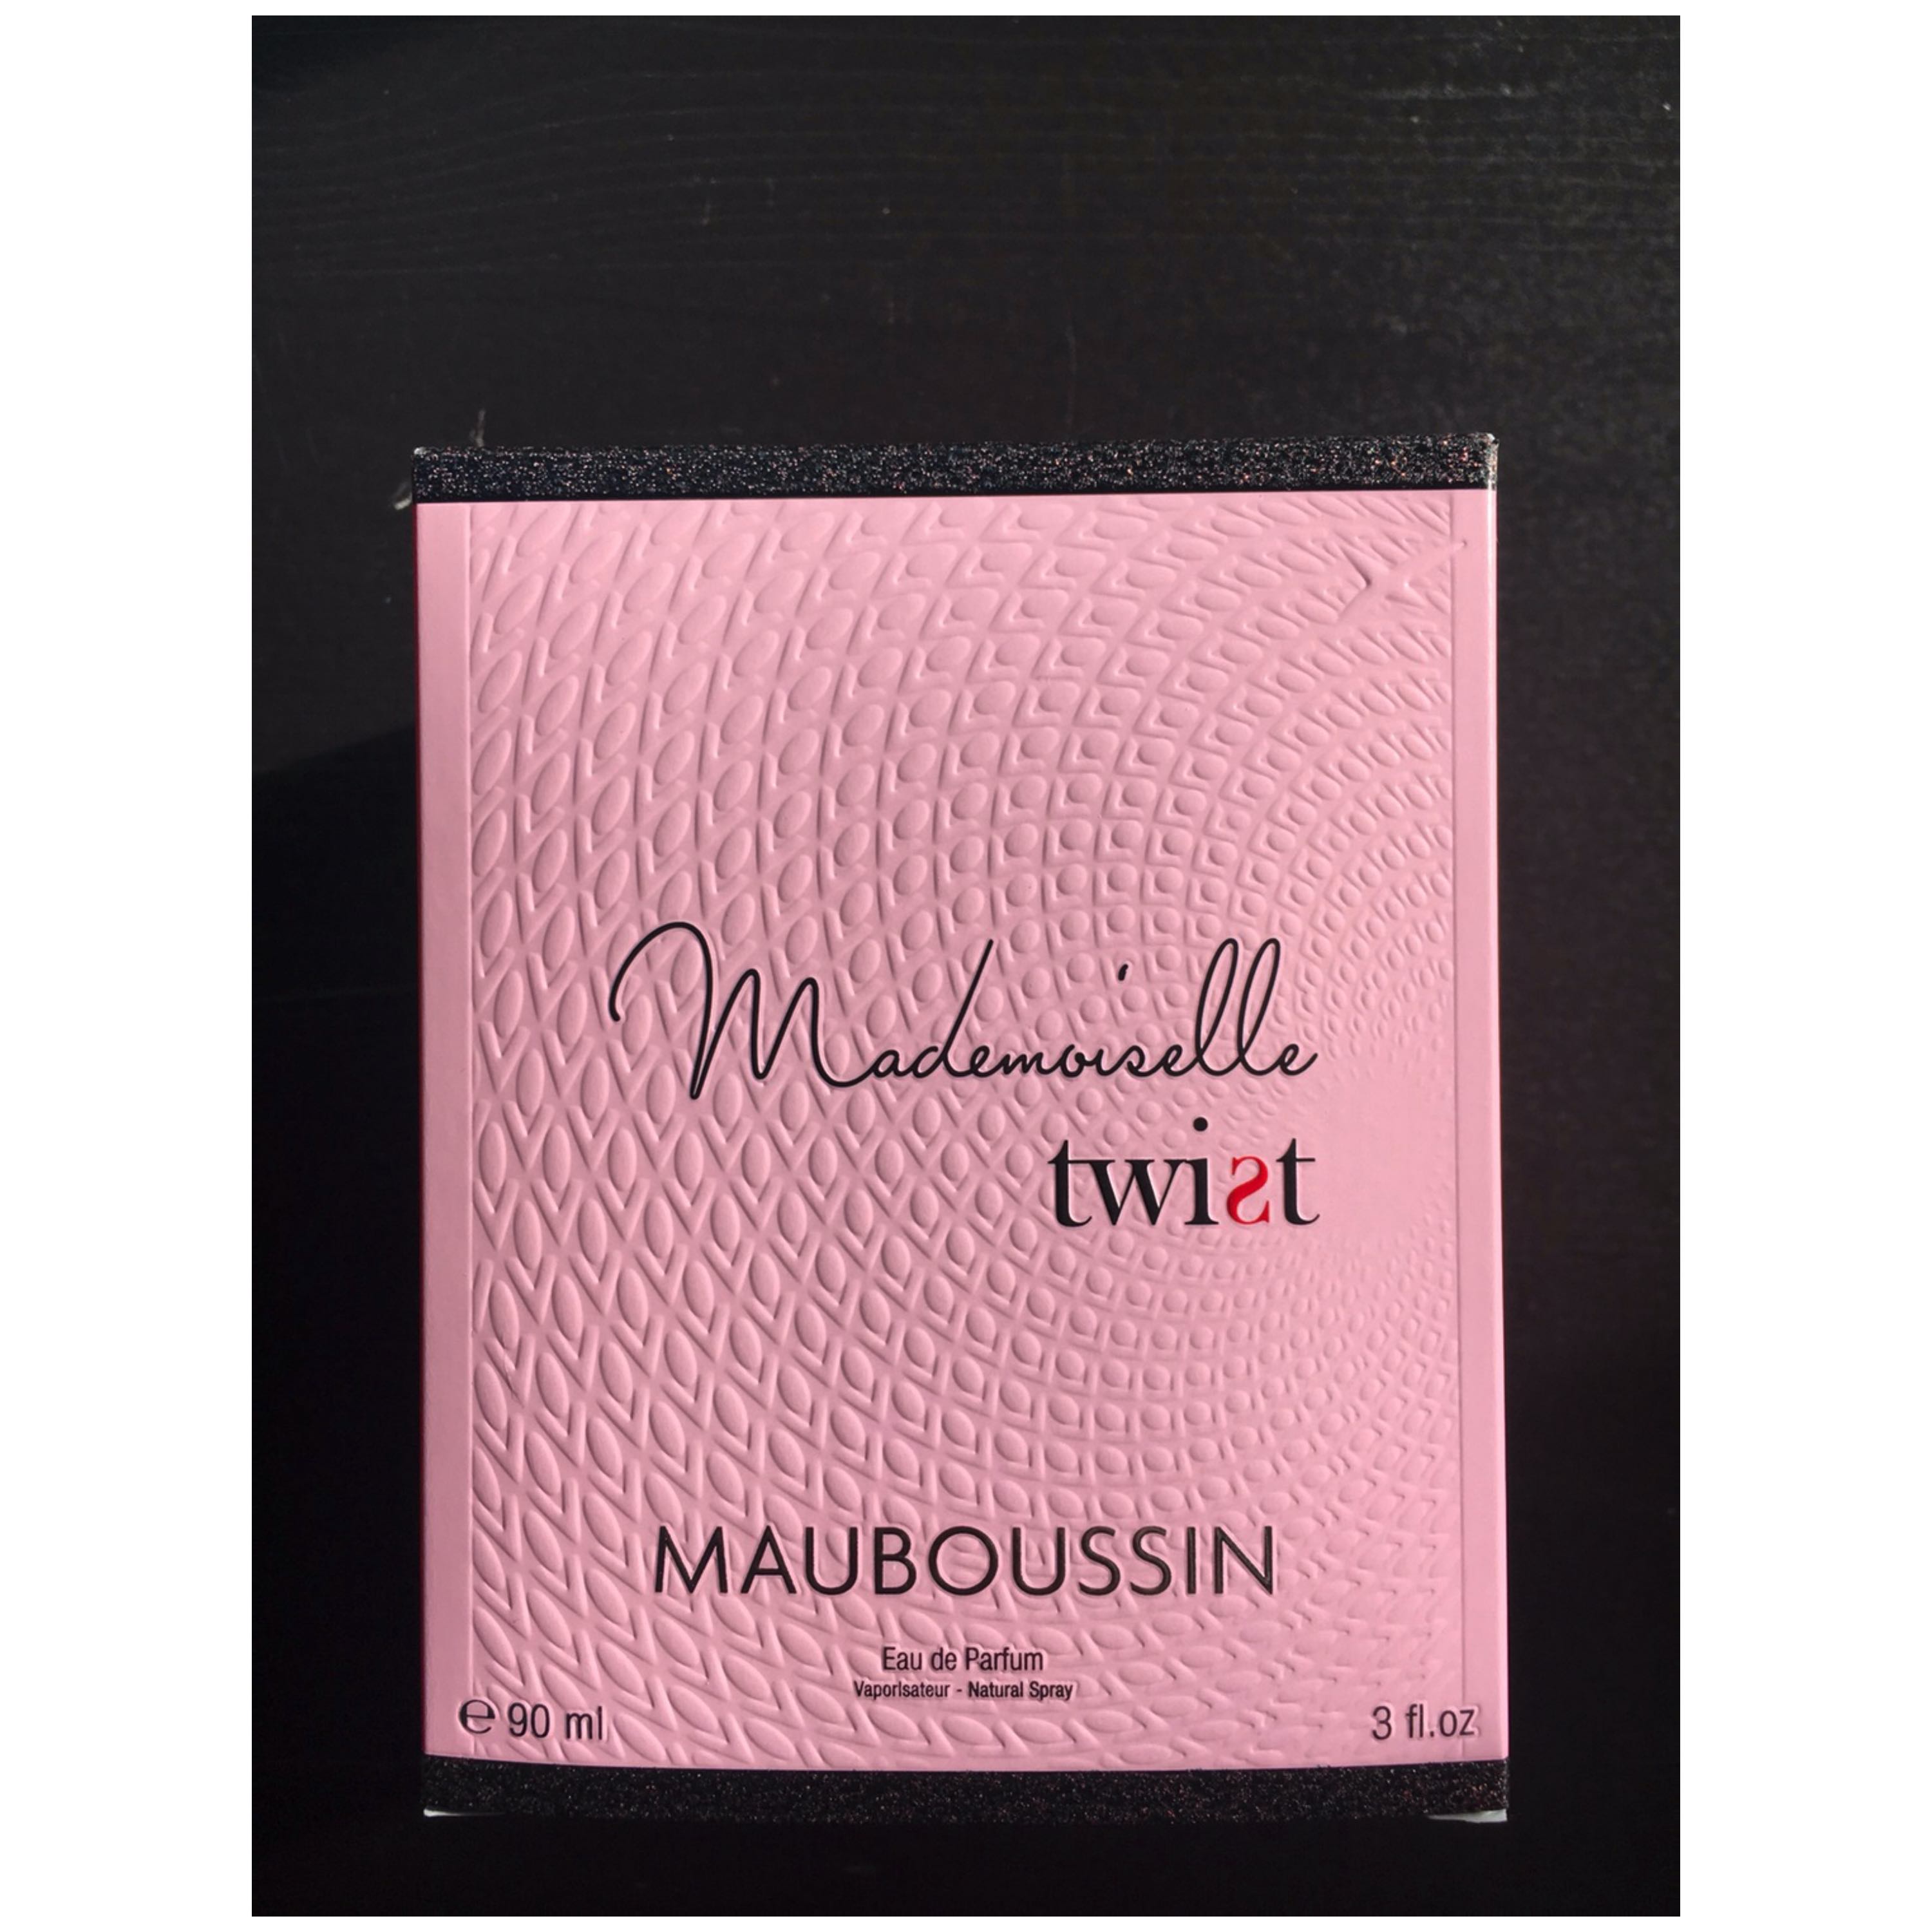  Mauboussin - Mademoiselle Twist eau de parfum 90 ml 